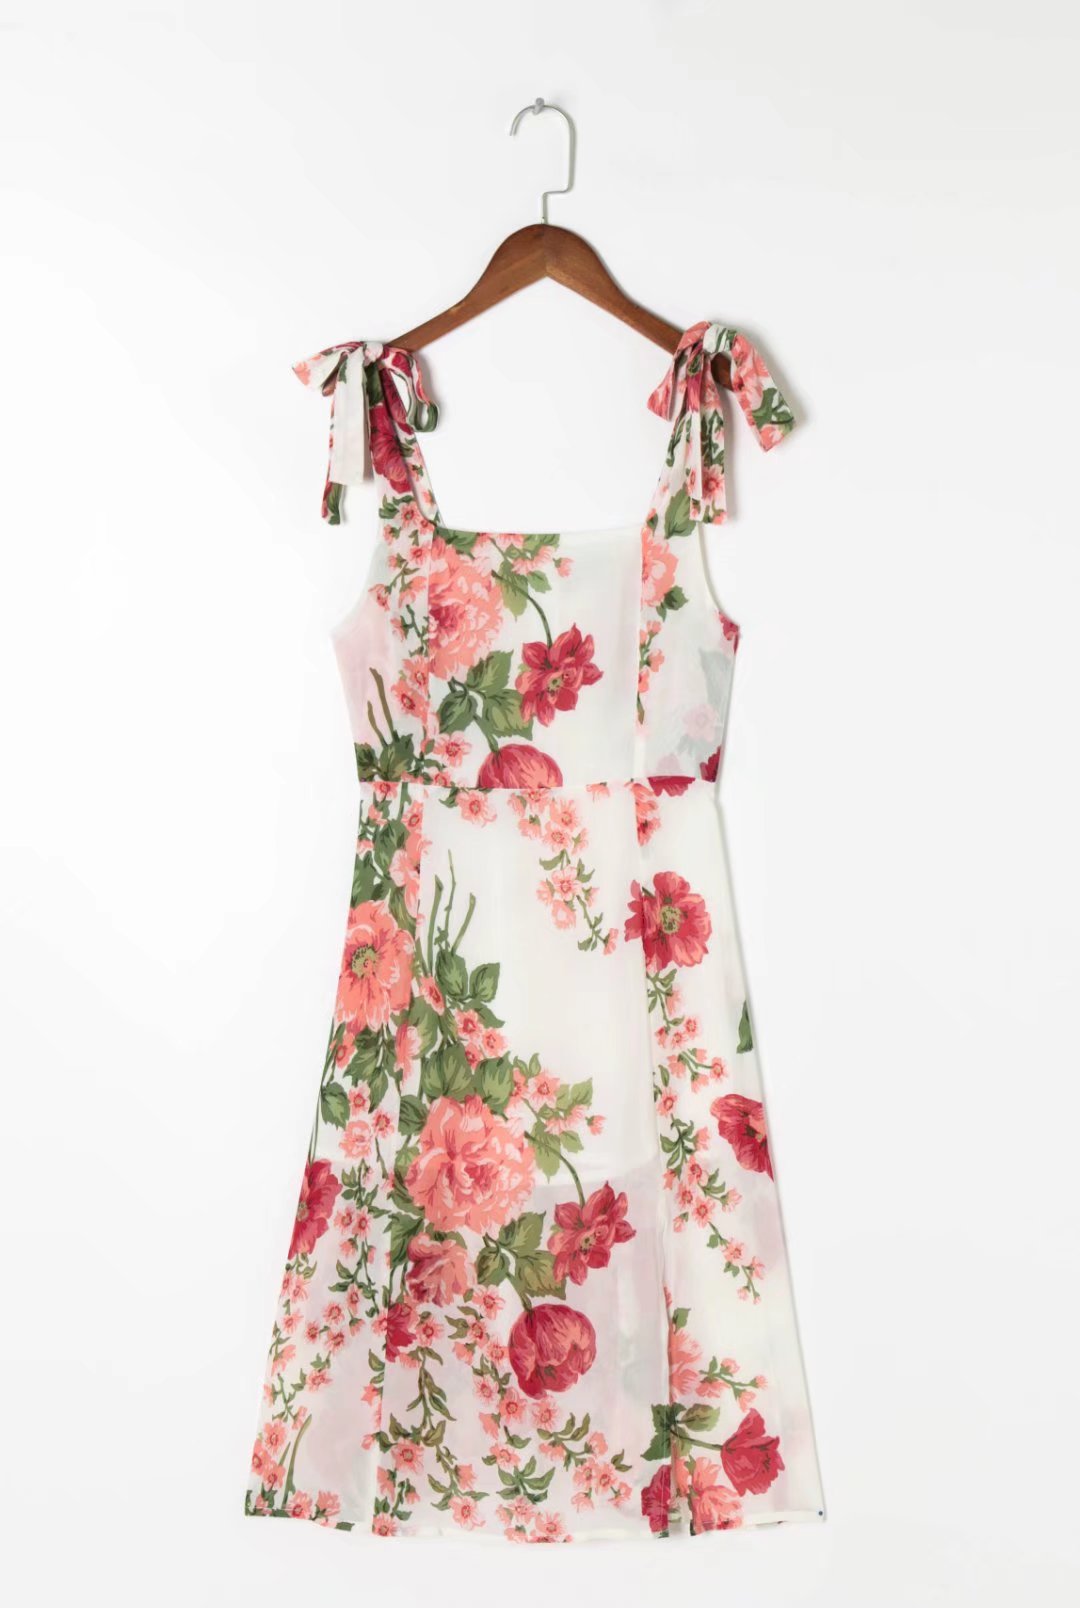 Sundress Square Collar Floral Printing On White Background New Side Slit Strap Dress For Women Shoulder Bow